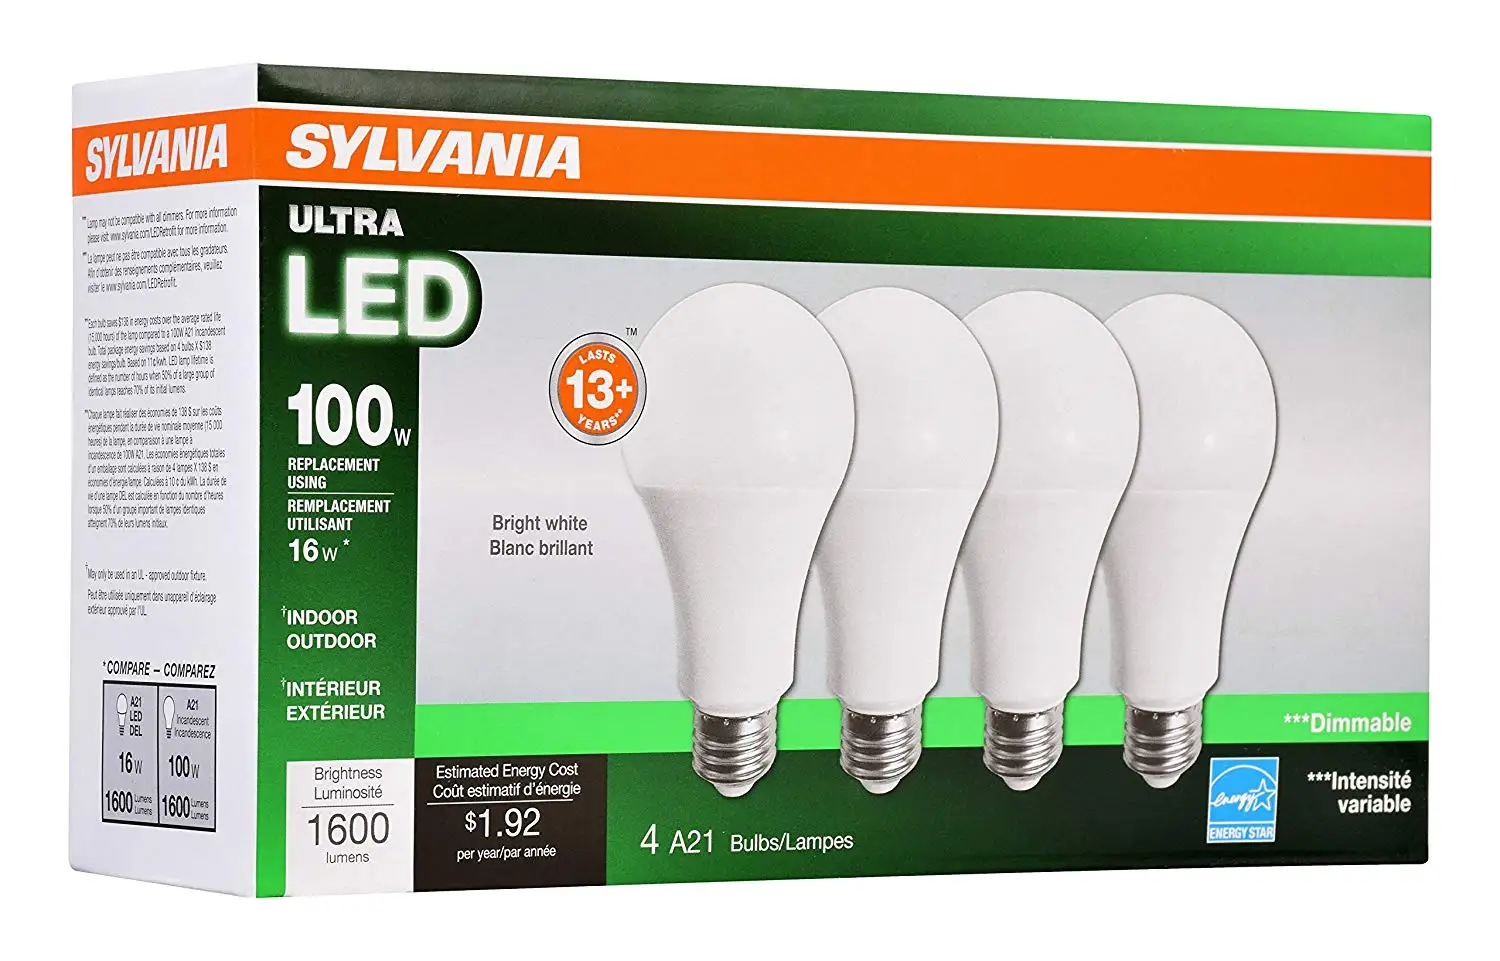 Sylvania Home Lighting 73188, 100W Equivalent, LED Bulb, A21 Lamp, Efficien...